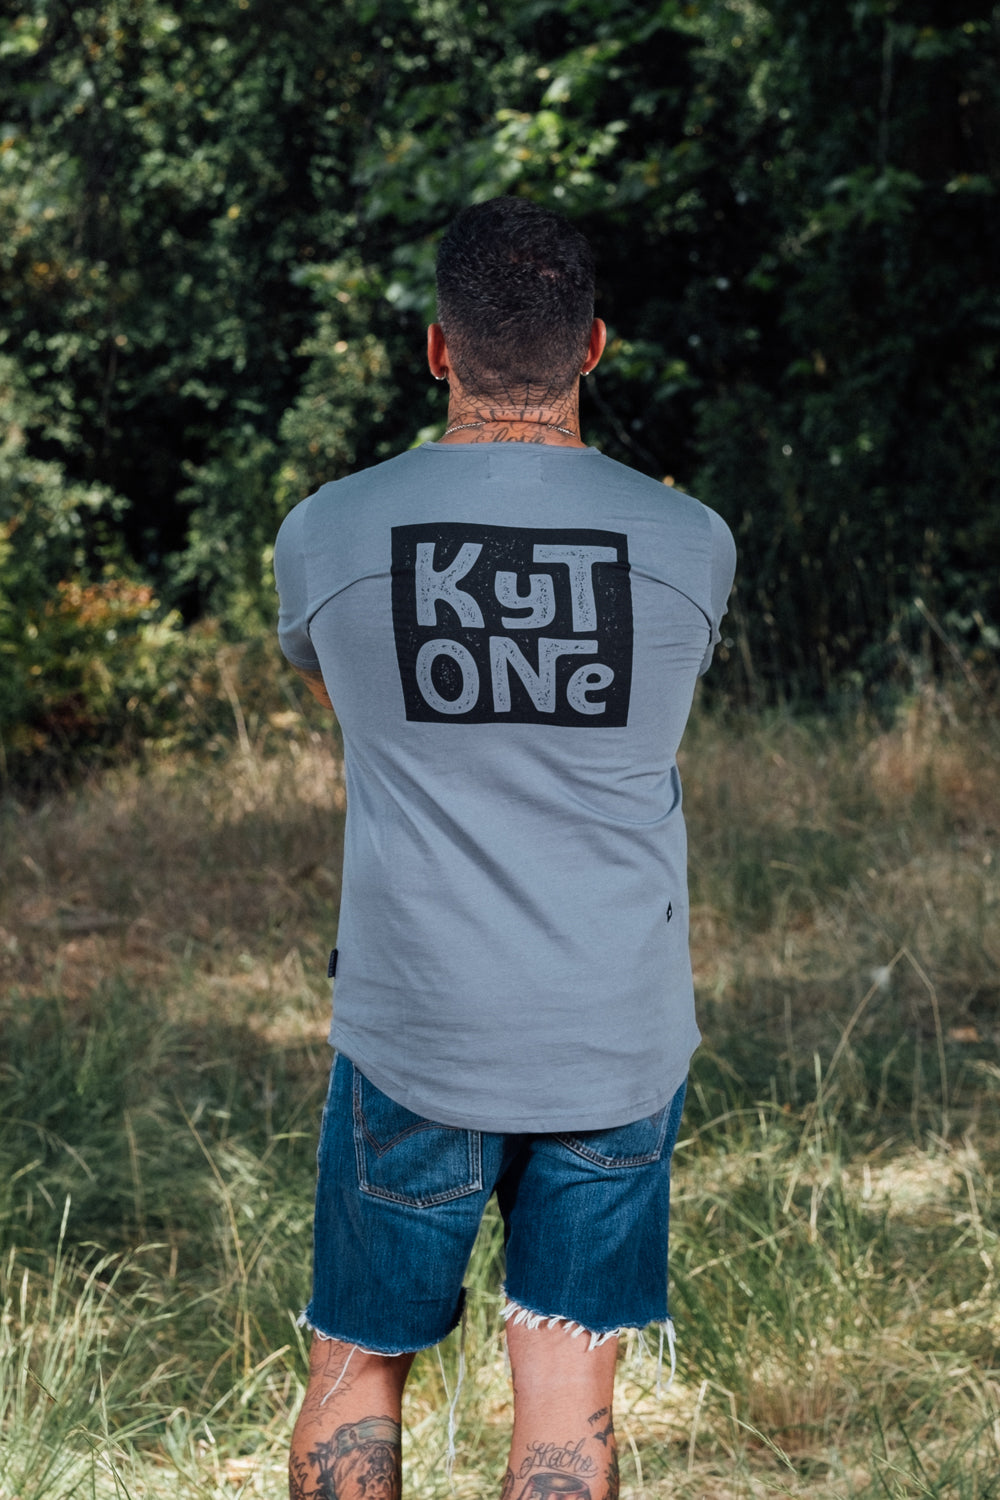 Kytone Racing Team T-Shirt